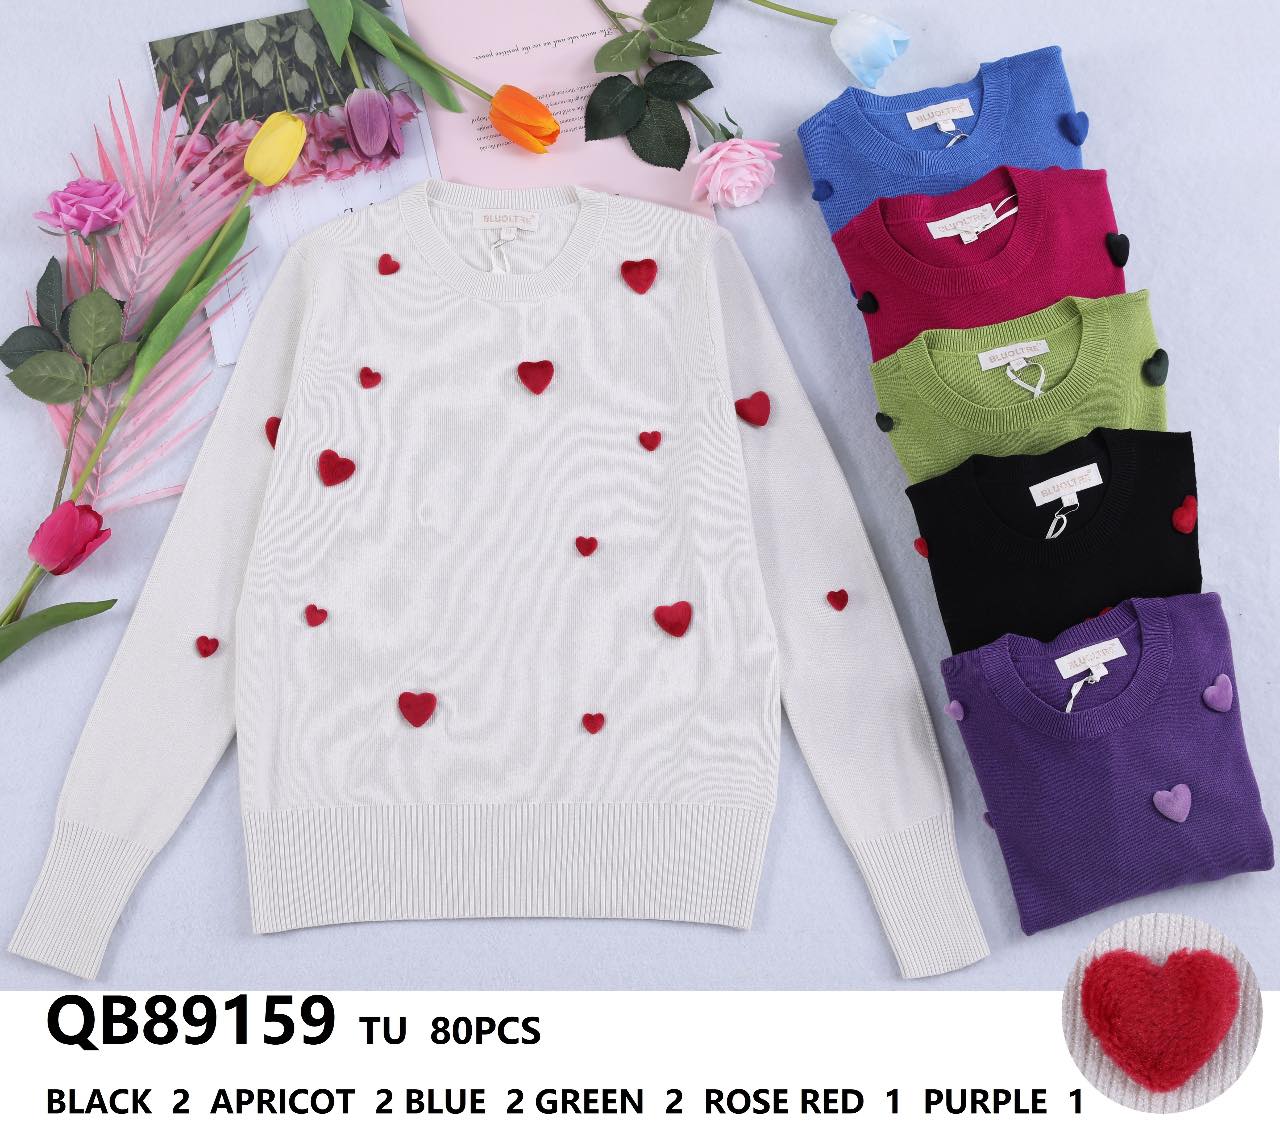 Swetry damska (Francja produkt) Roz Standard. Mix kolor, Paszka 10szt